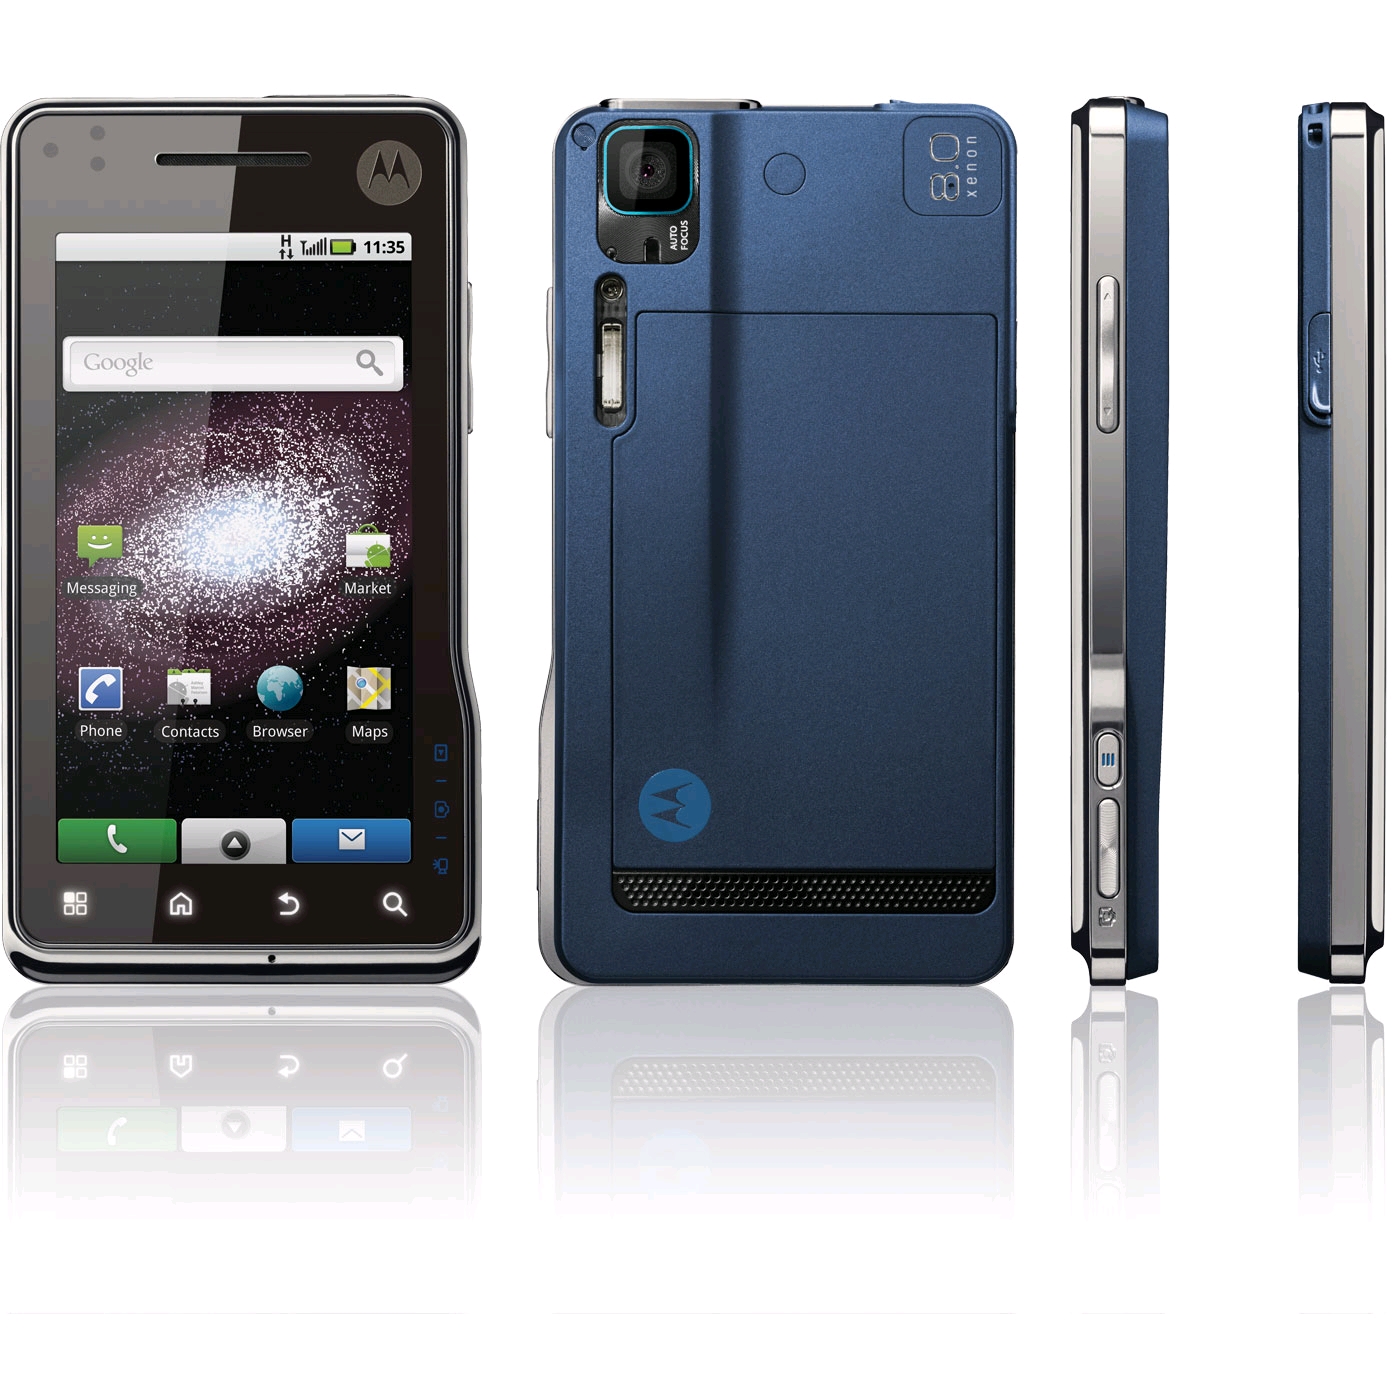 Motorola Milestone XT720   Navy blue  Unlocked  Smartphone